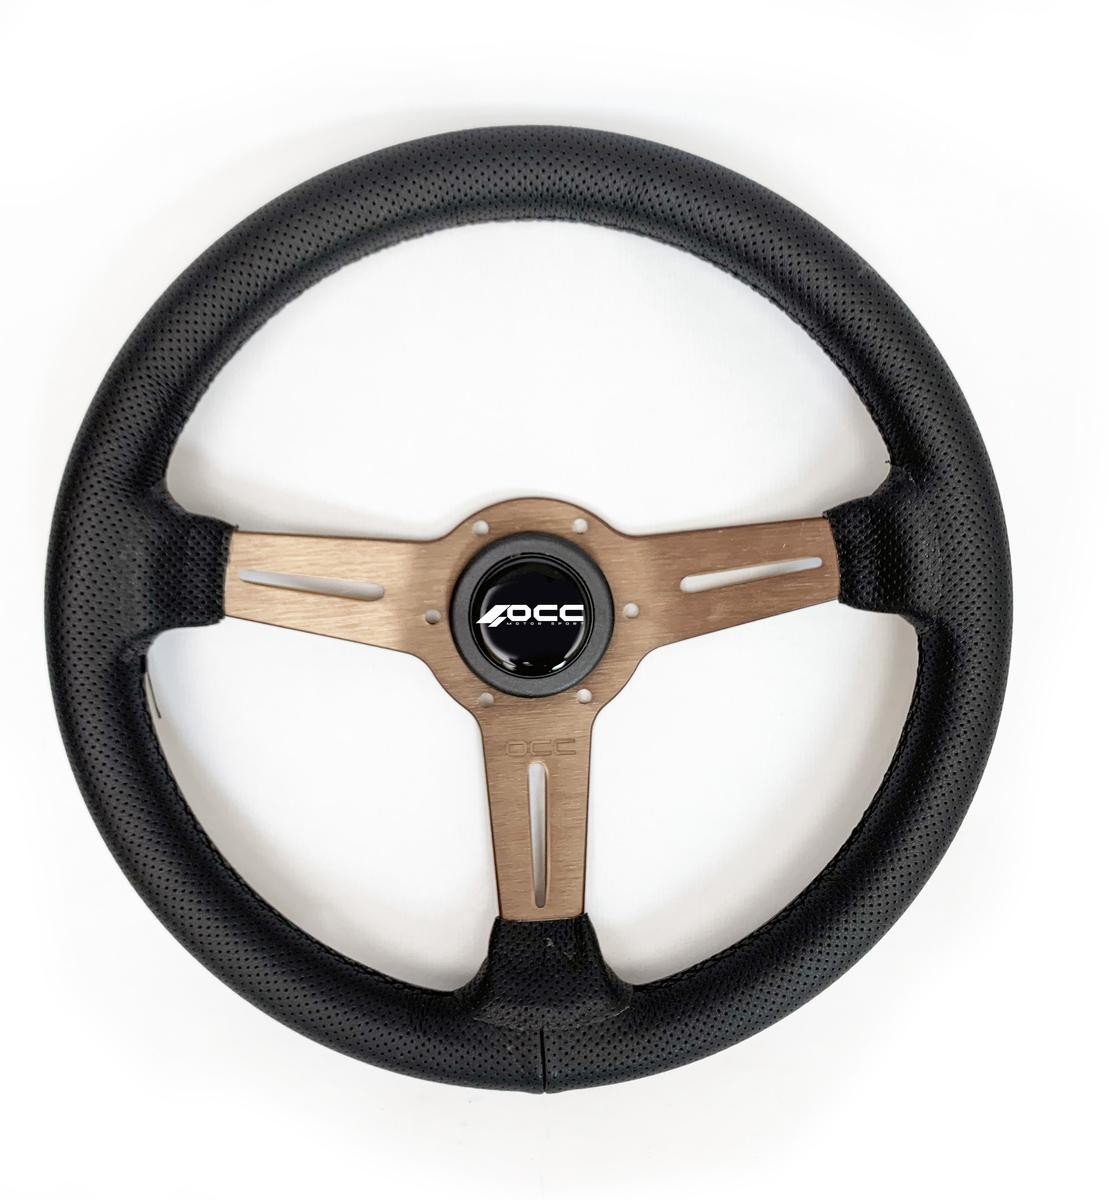 Suzuki LIANA Sports steering wheel Occ Motorsport OCCVOL009 cheap